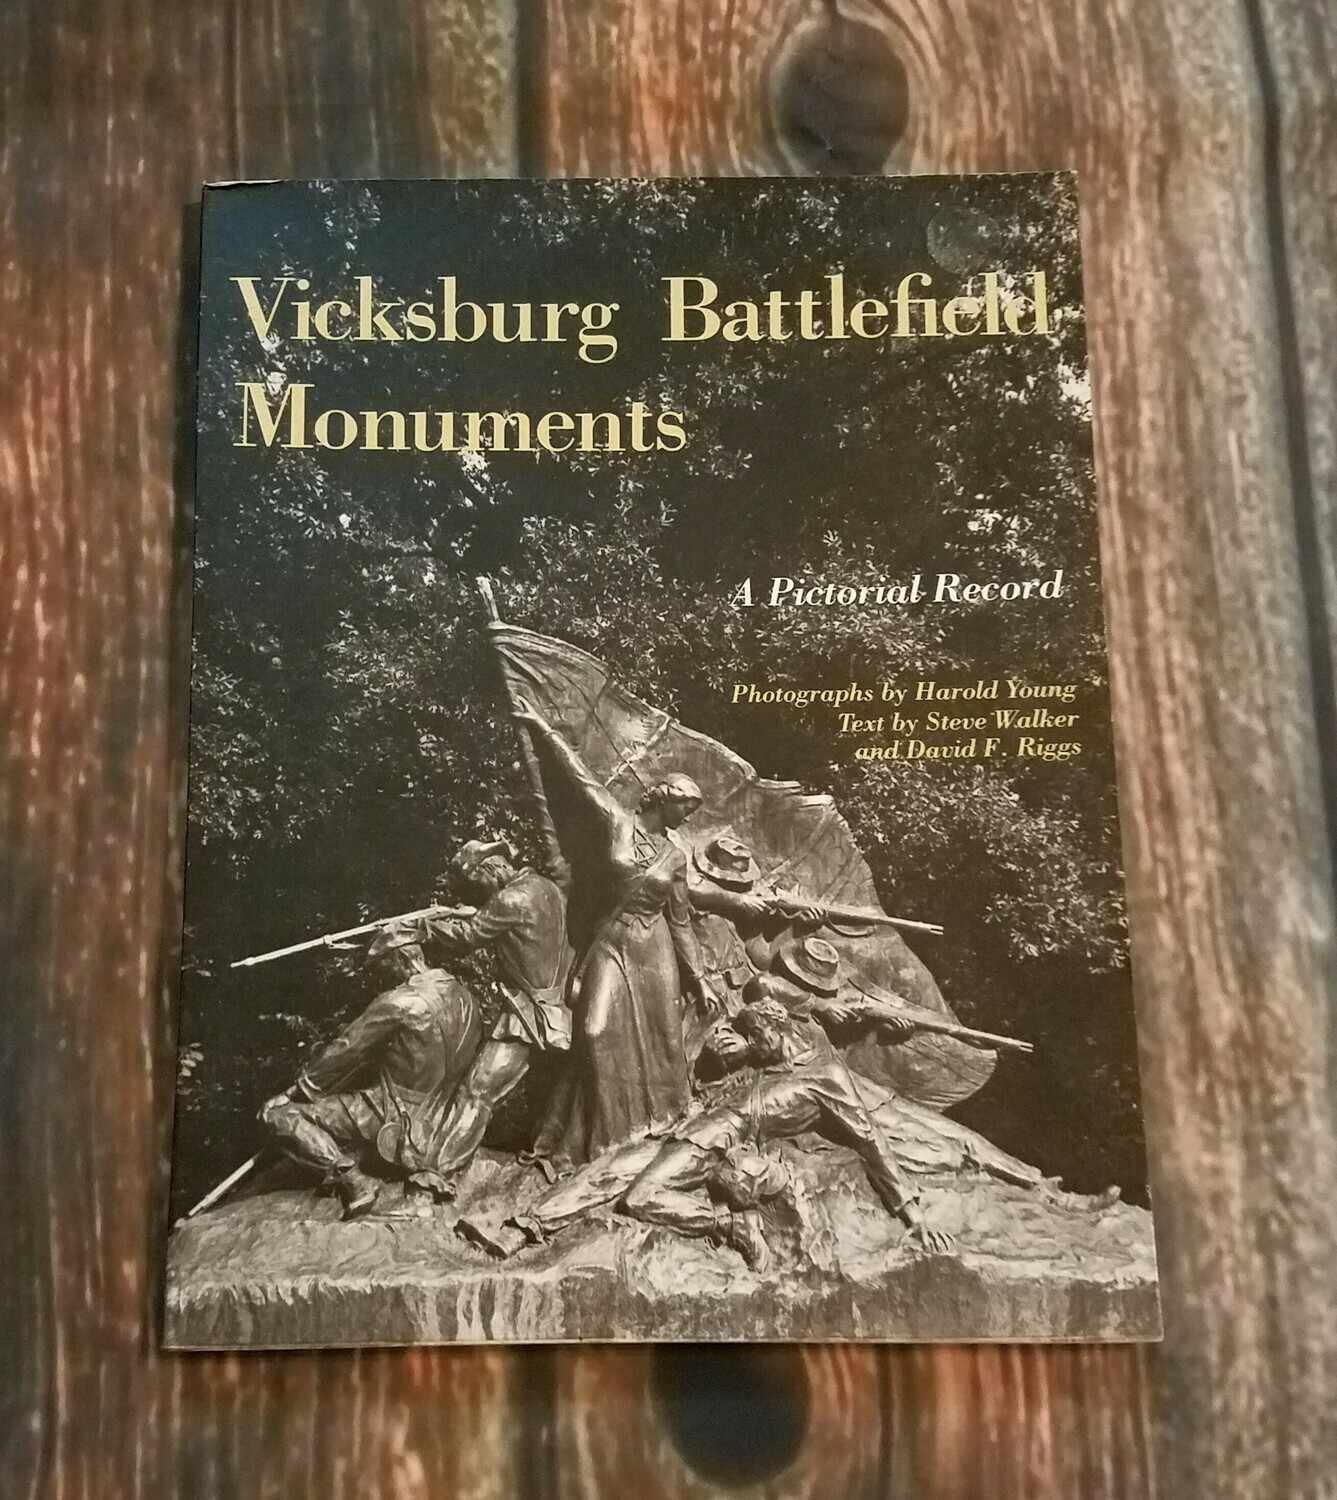 Vicksburg Battlefield Monuments by Harold Young, Steve Walker, and David F. Riggs